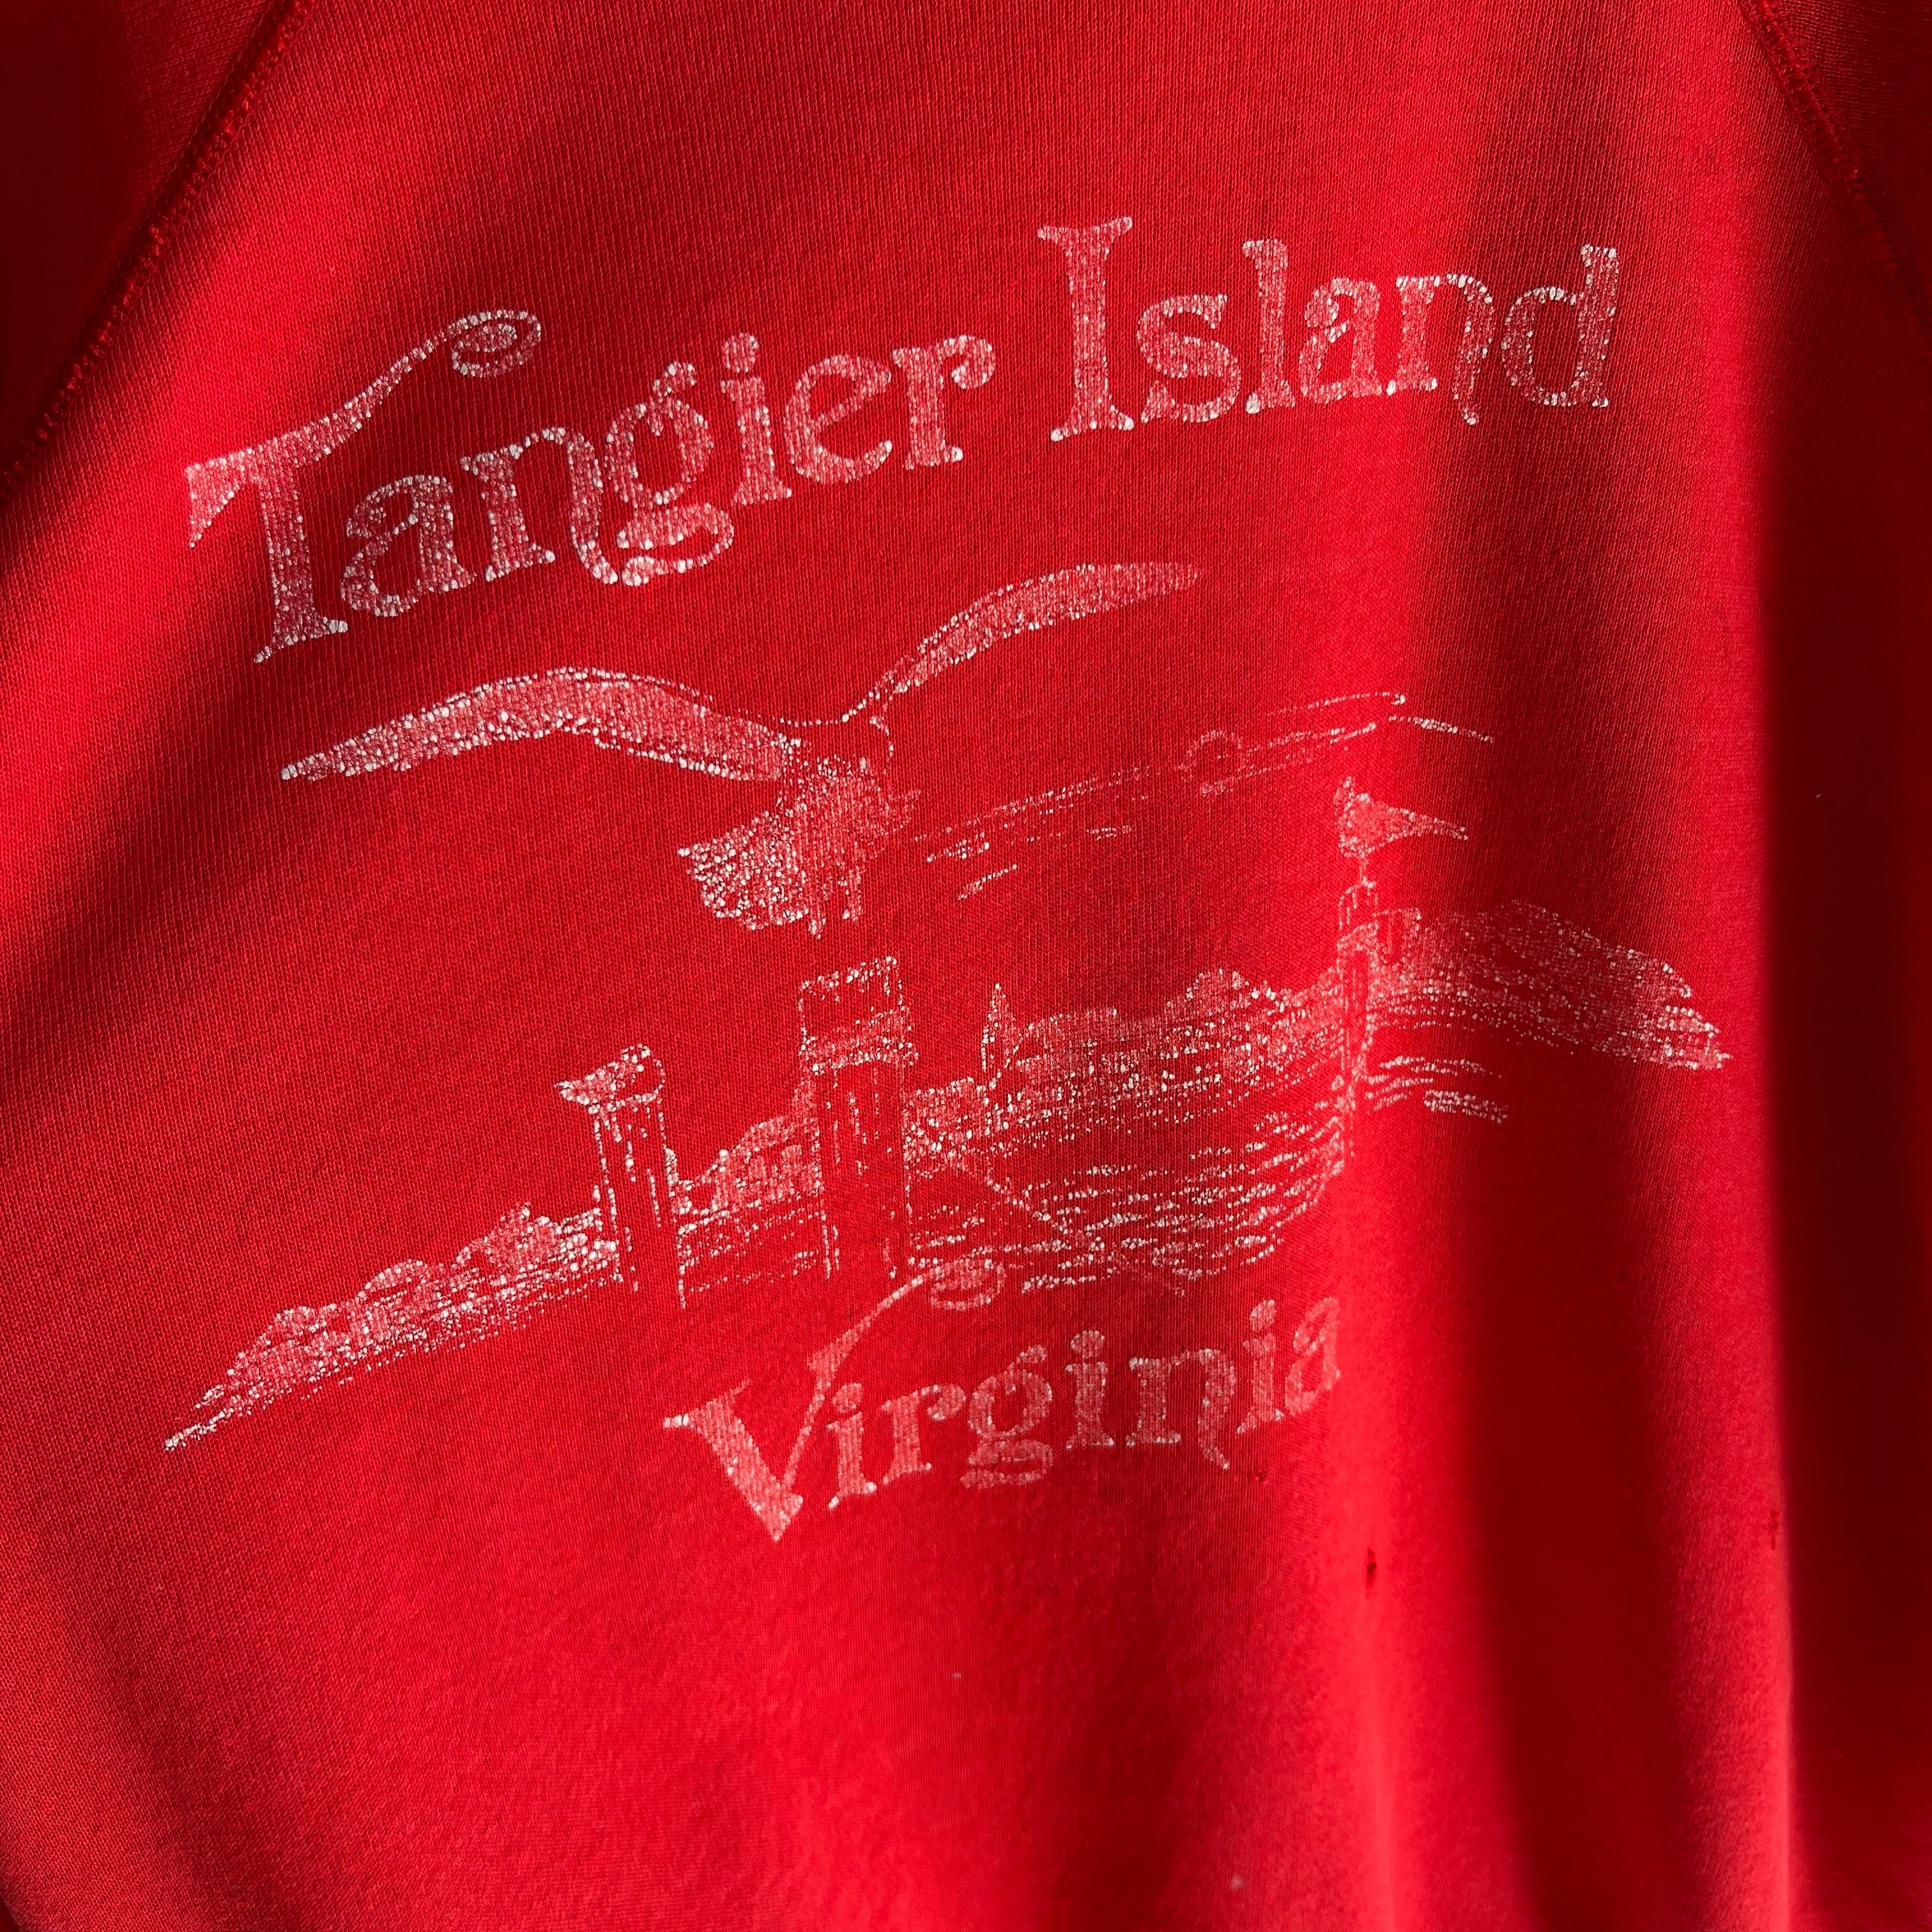 1980s Tangier Island, Virginia Worn Out Sweatshirt